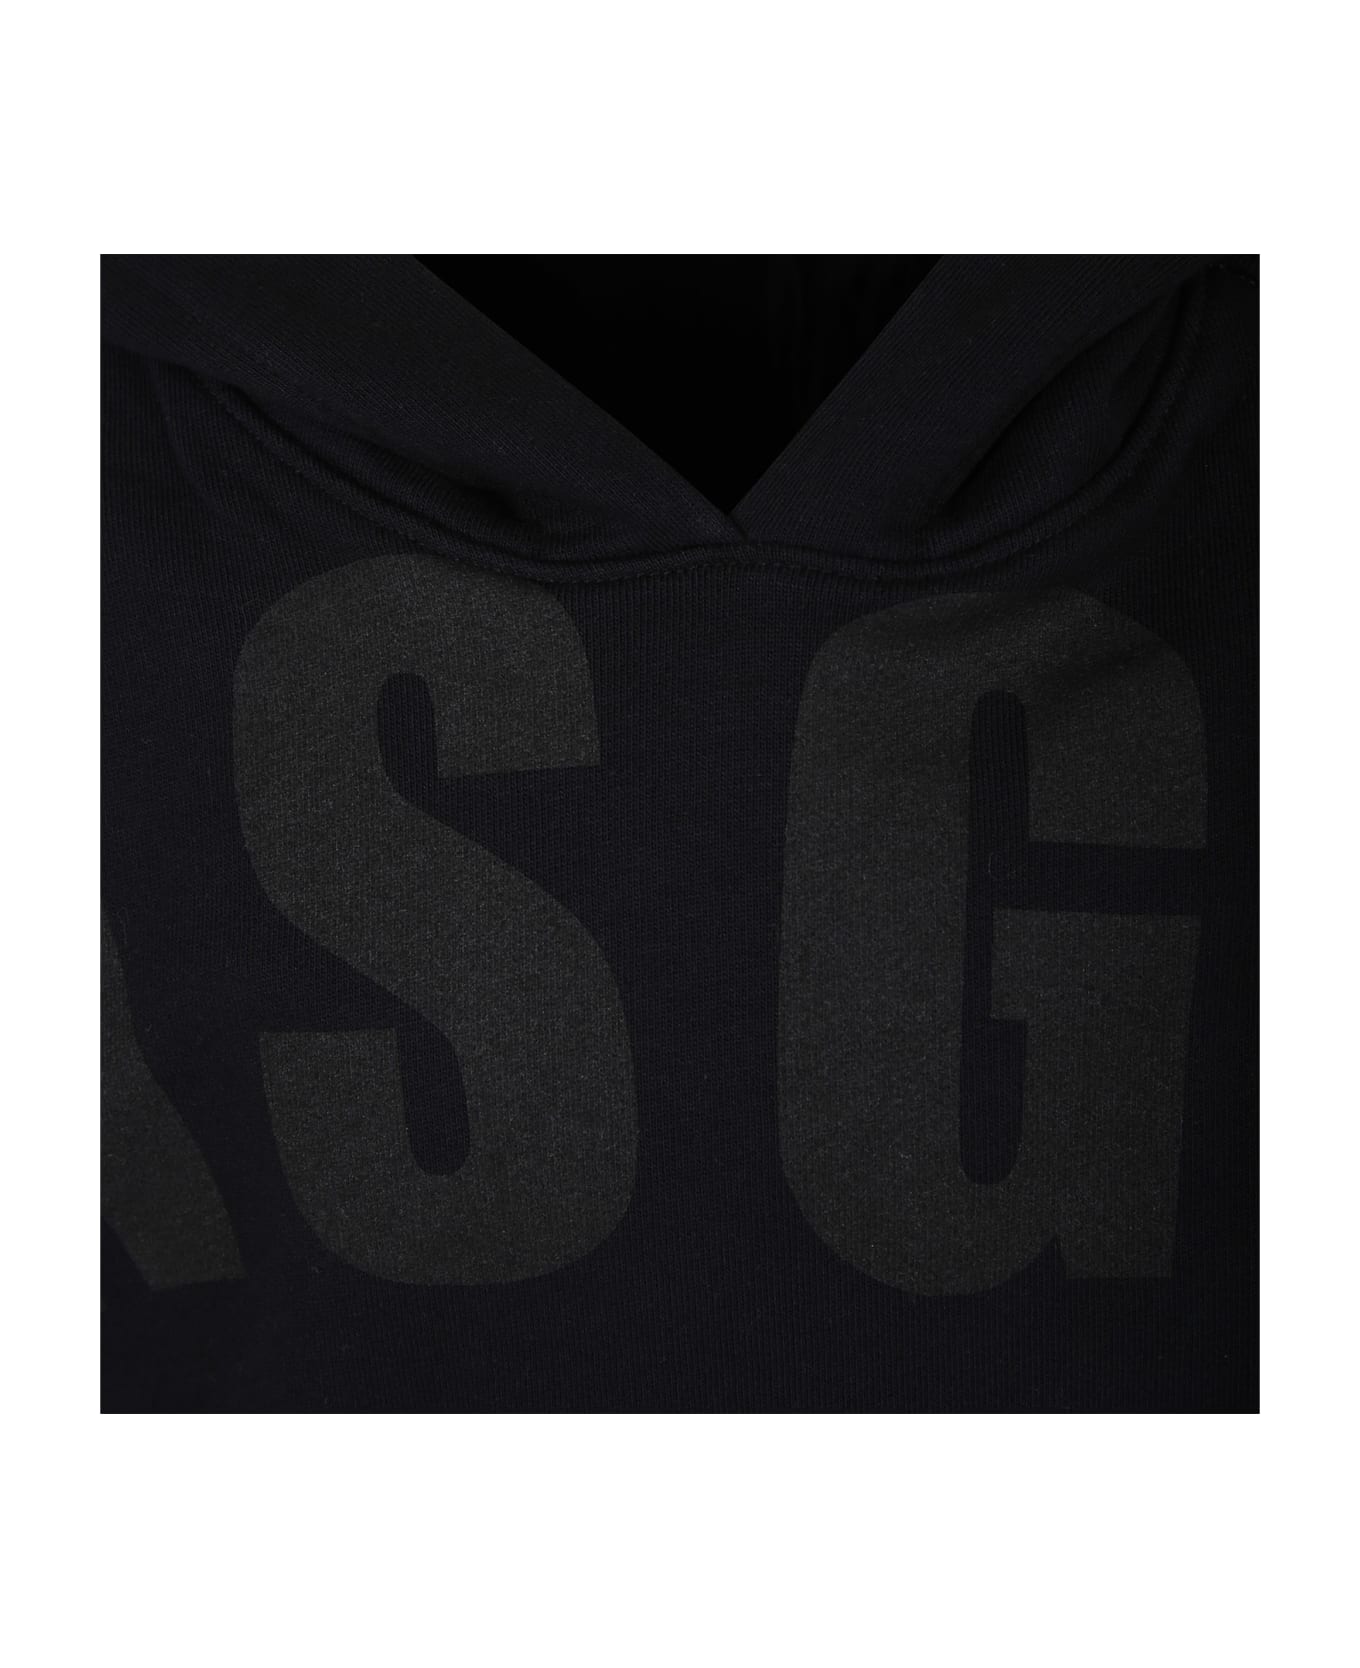 MSGM Black Sweatshirt For Kids With Logo - Nero ニットウェア＆スウェットシャツ